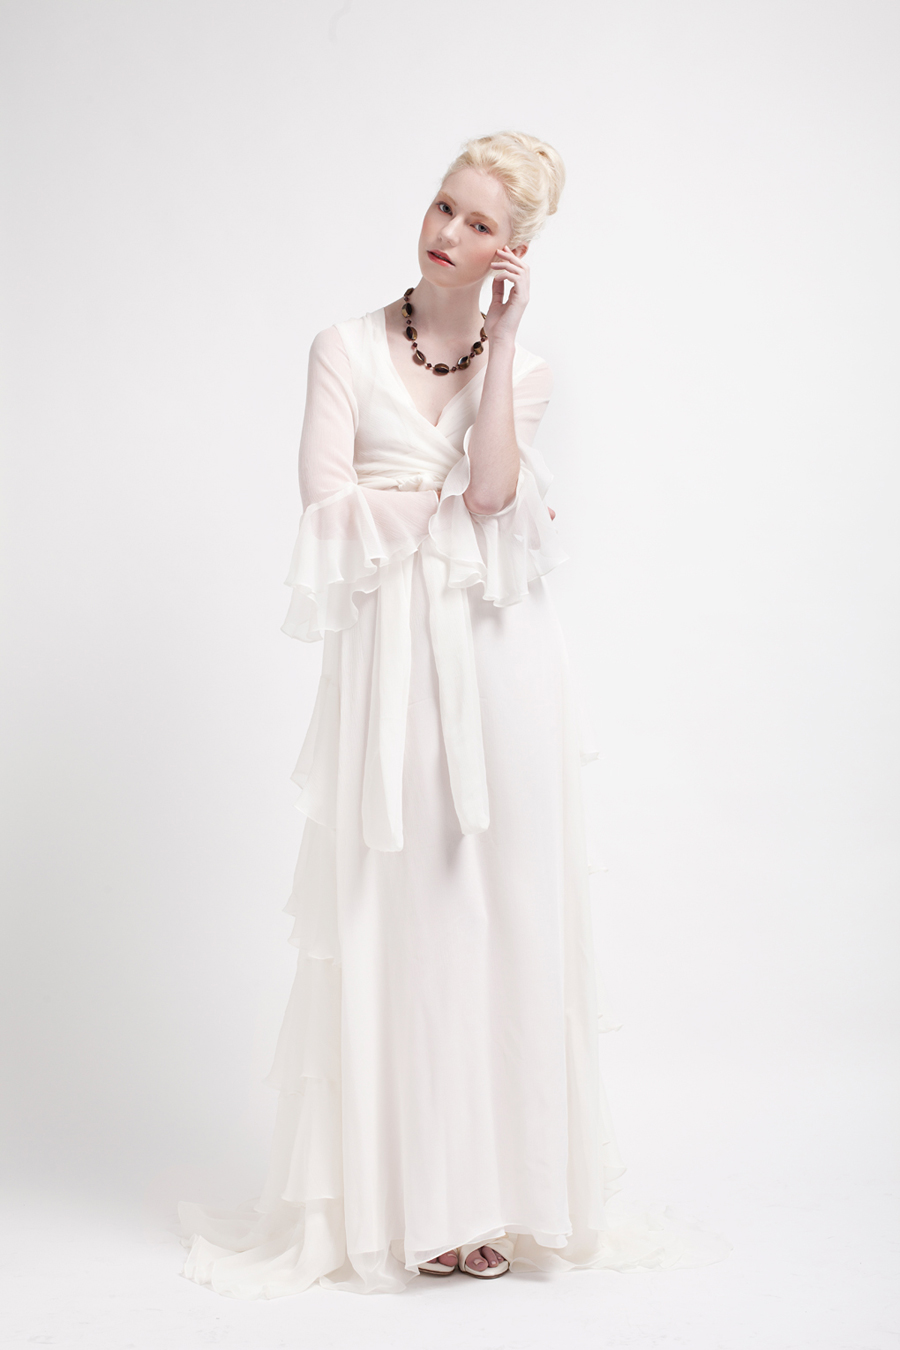 Florence - Kelsey Genna Debut Bridal Collection